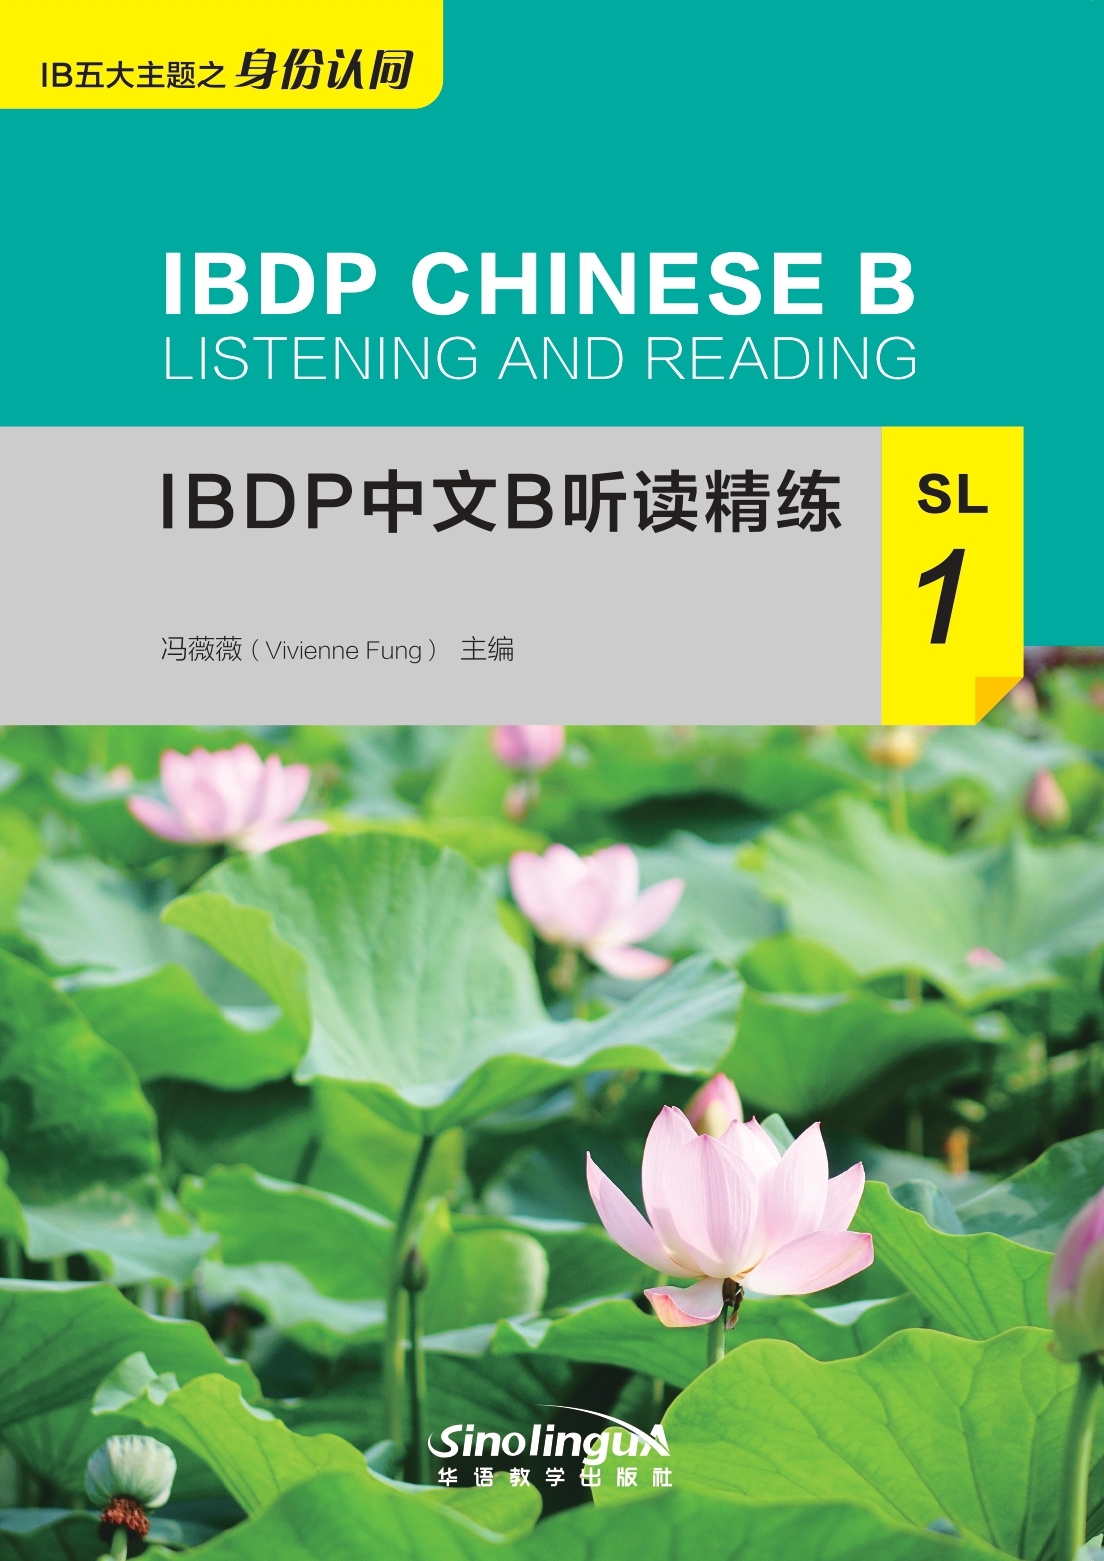 IBDP Chinese B Listening and Reading ·SL·1